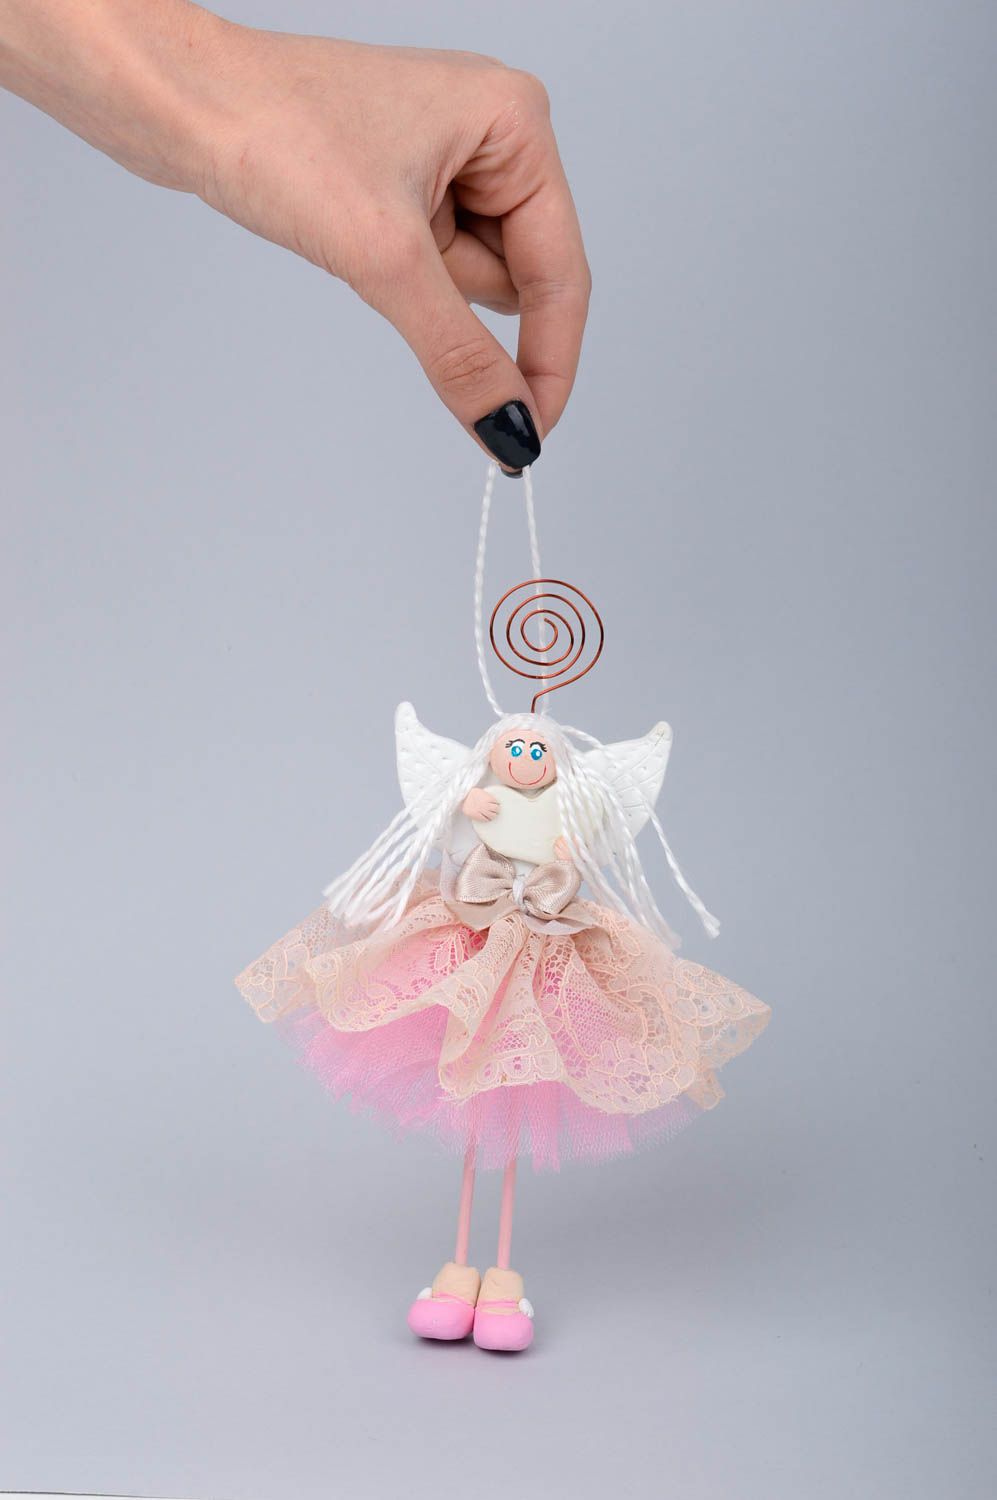 Talisman fridge magnet handmade clay doll home ideas decorative use only photo 2